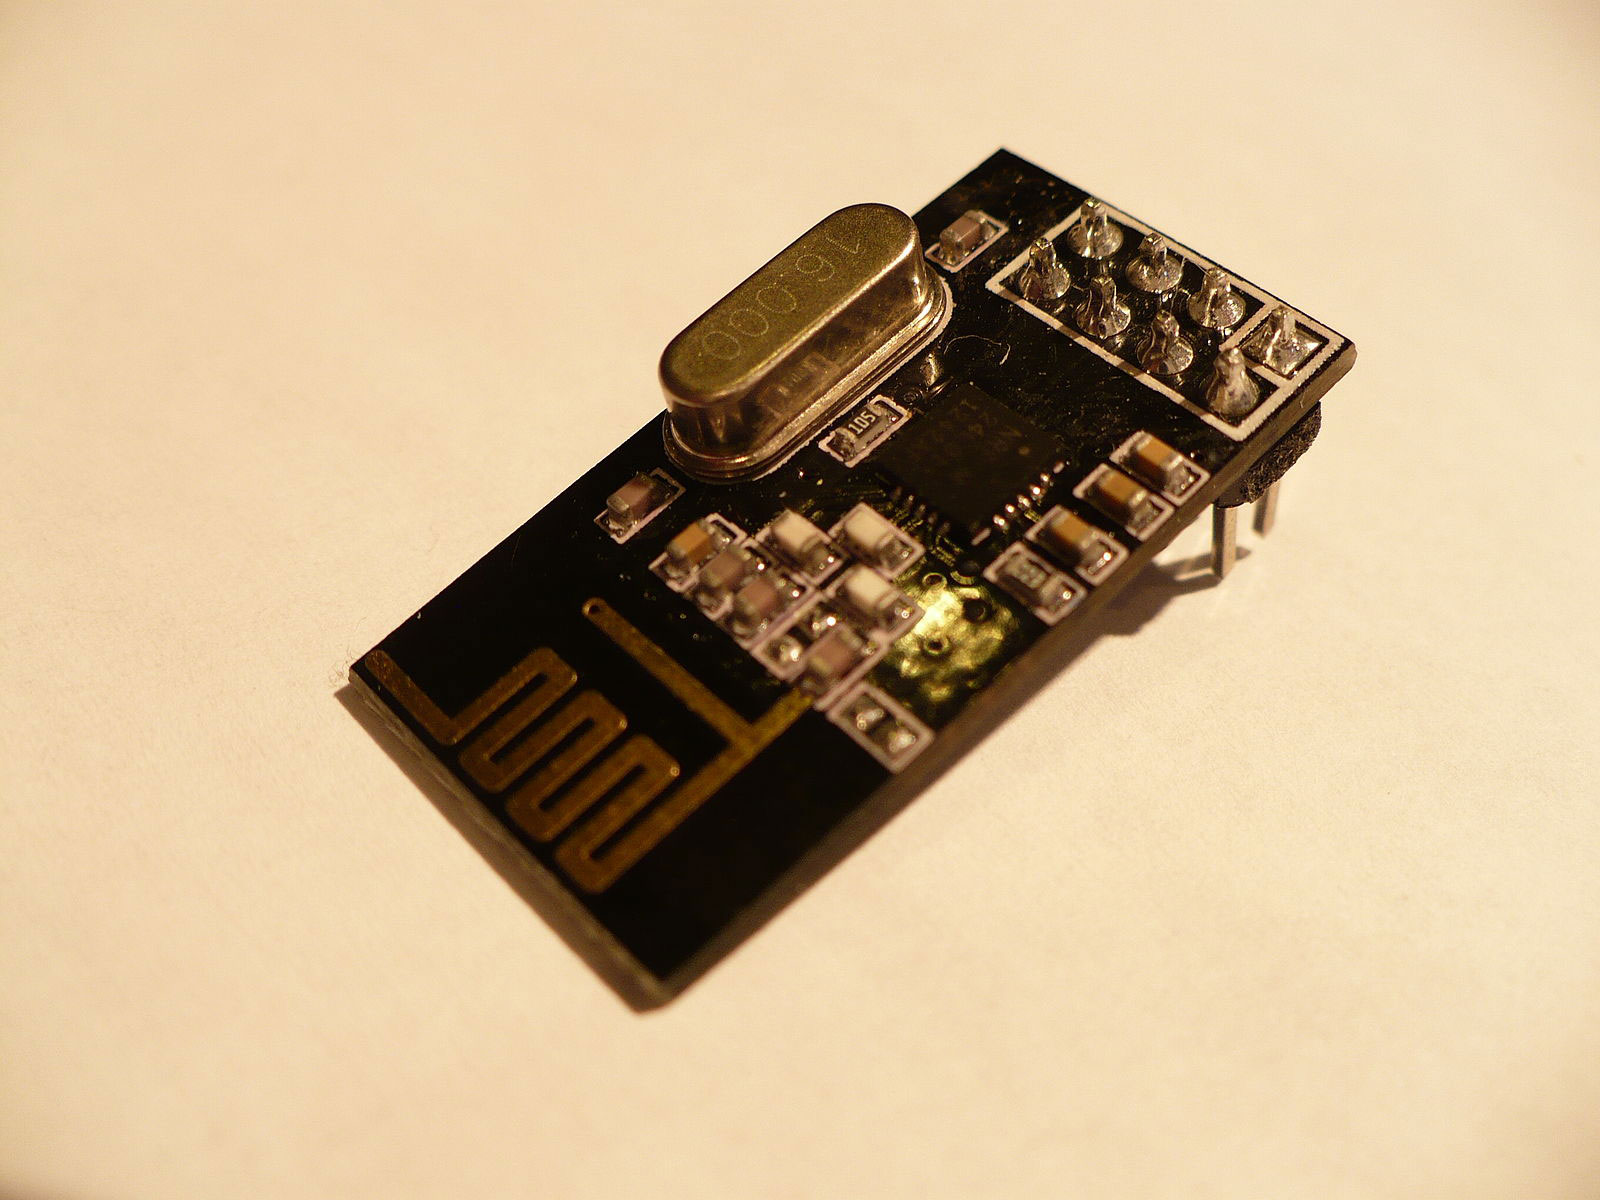 A close-up of the nRF24L01 wireless module